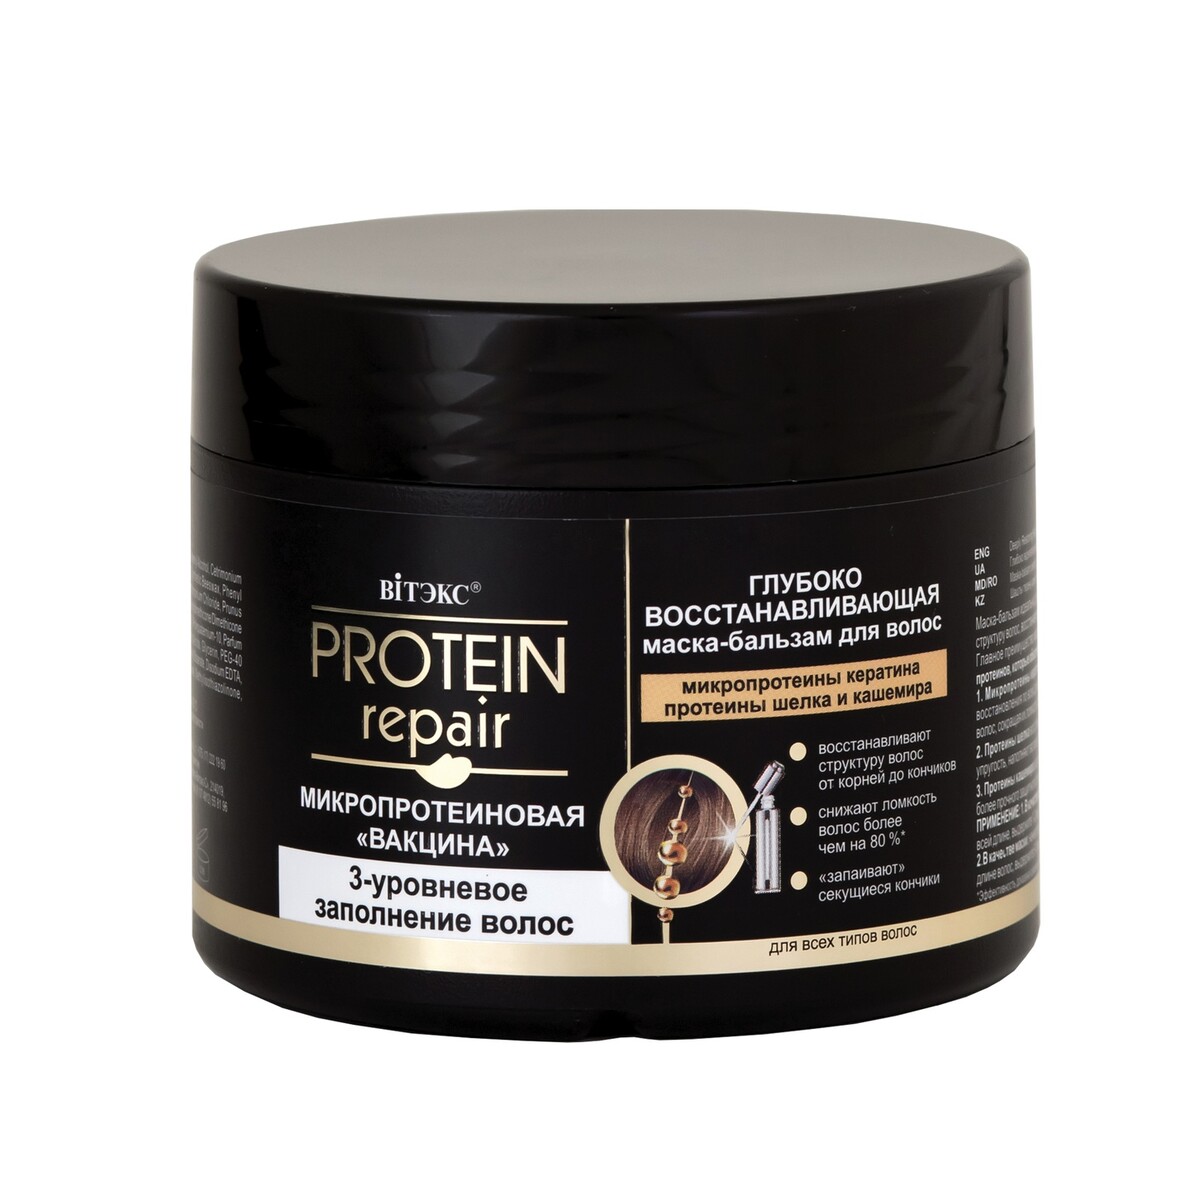 -   protein repair